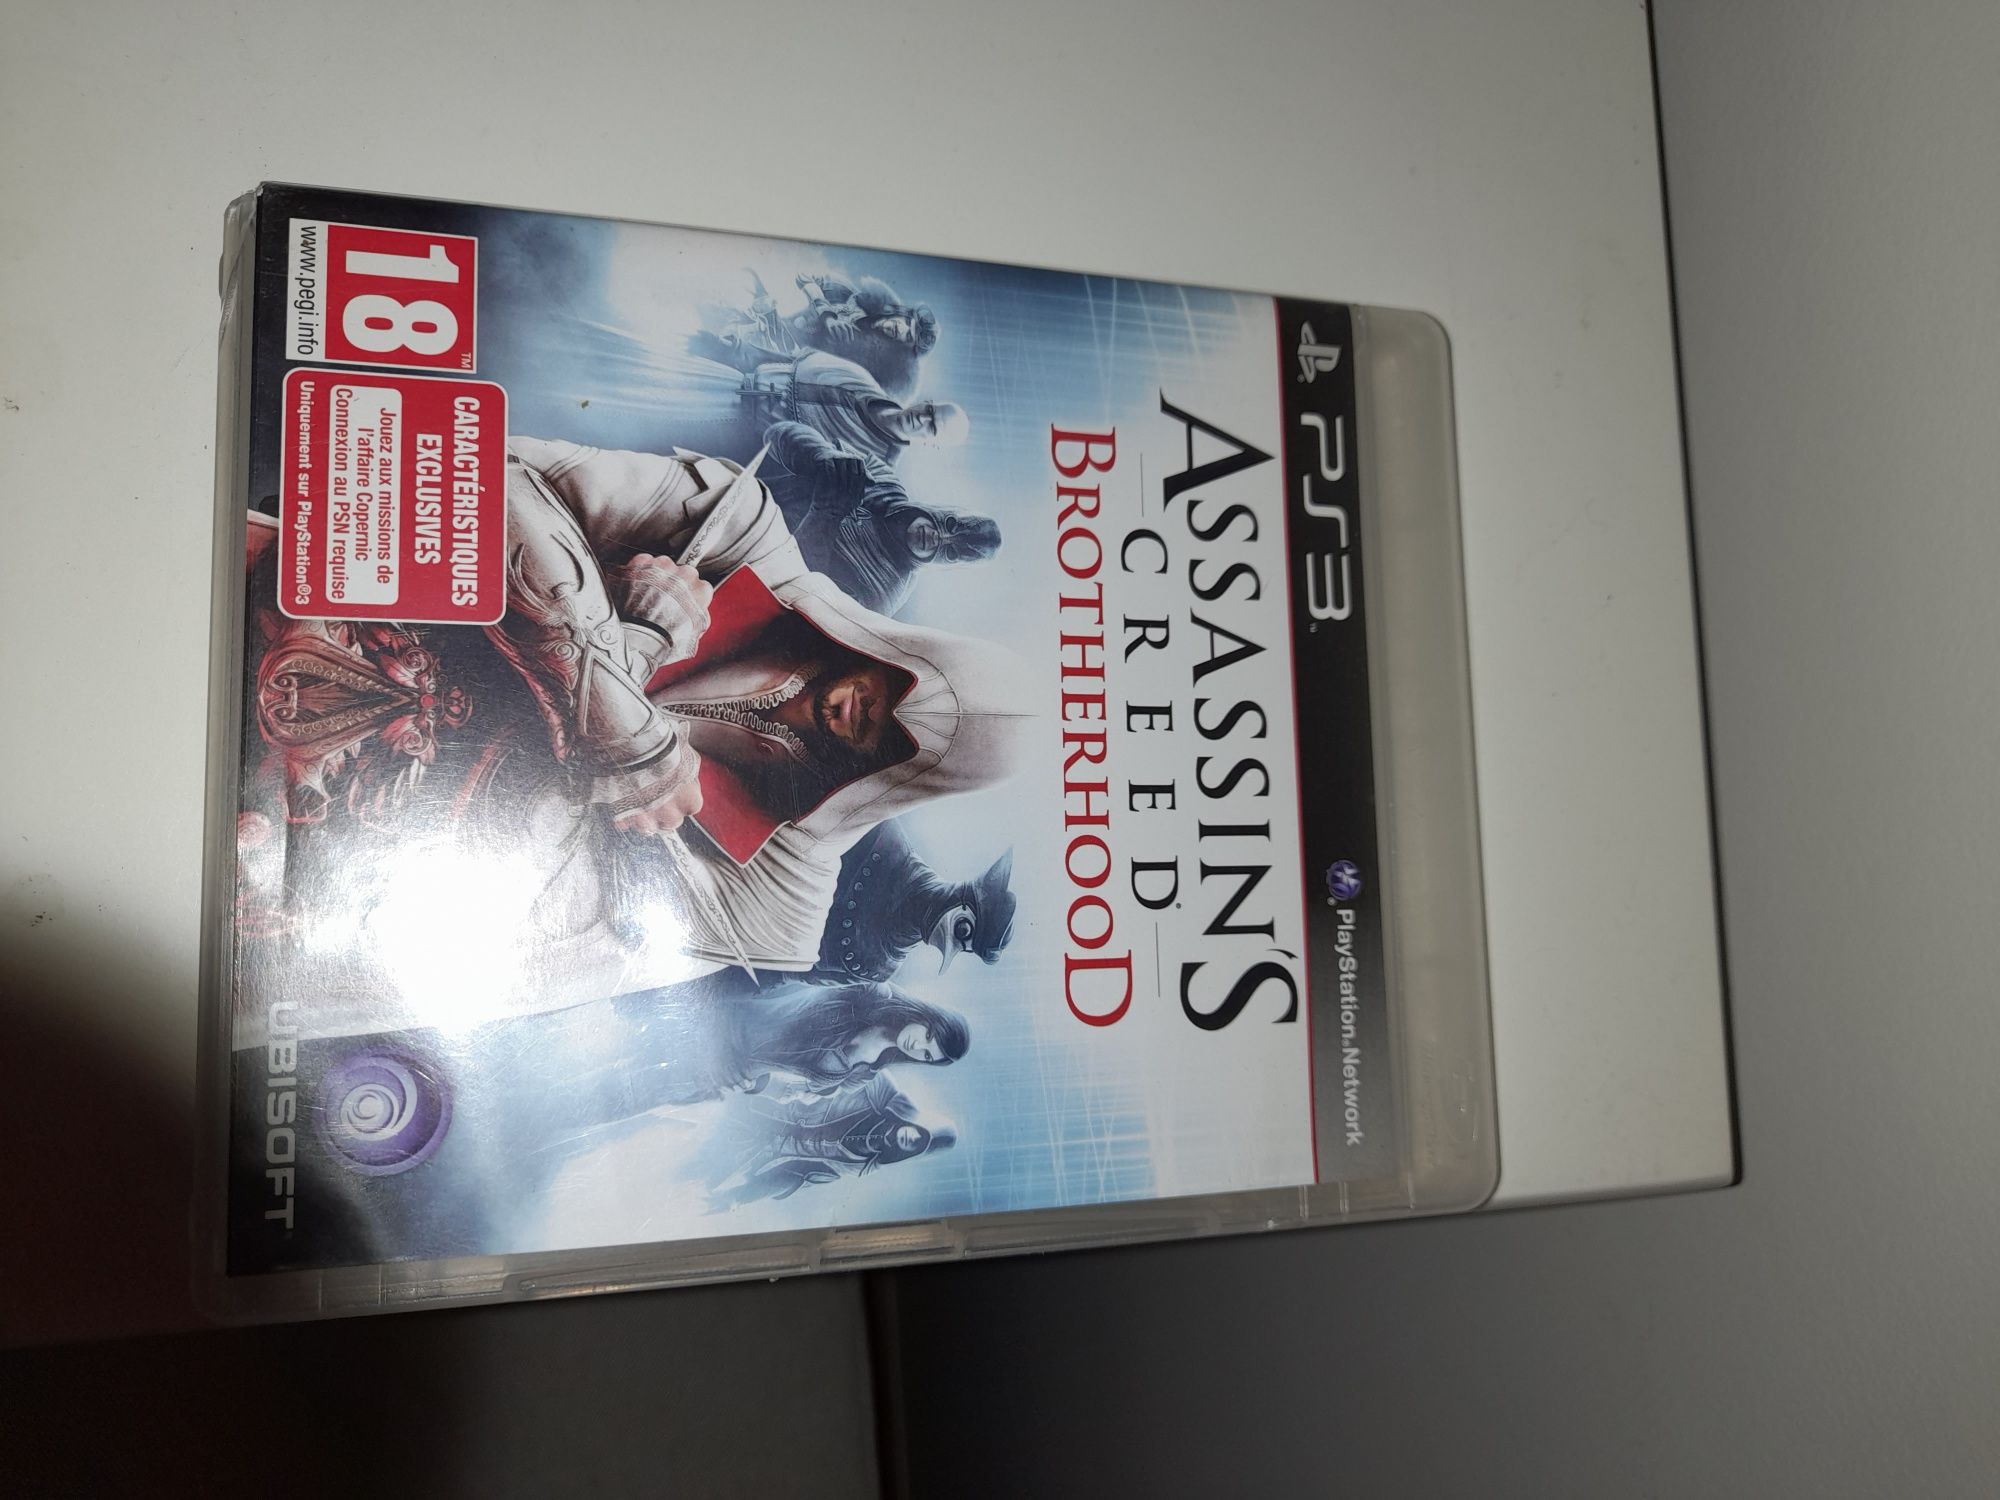 Assassin's Creed Brotherhood PS3